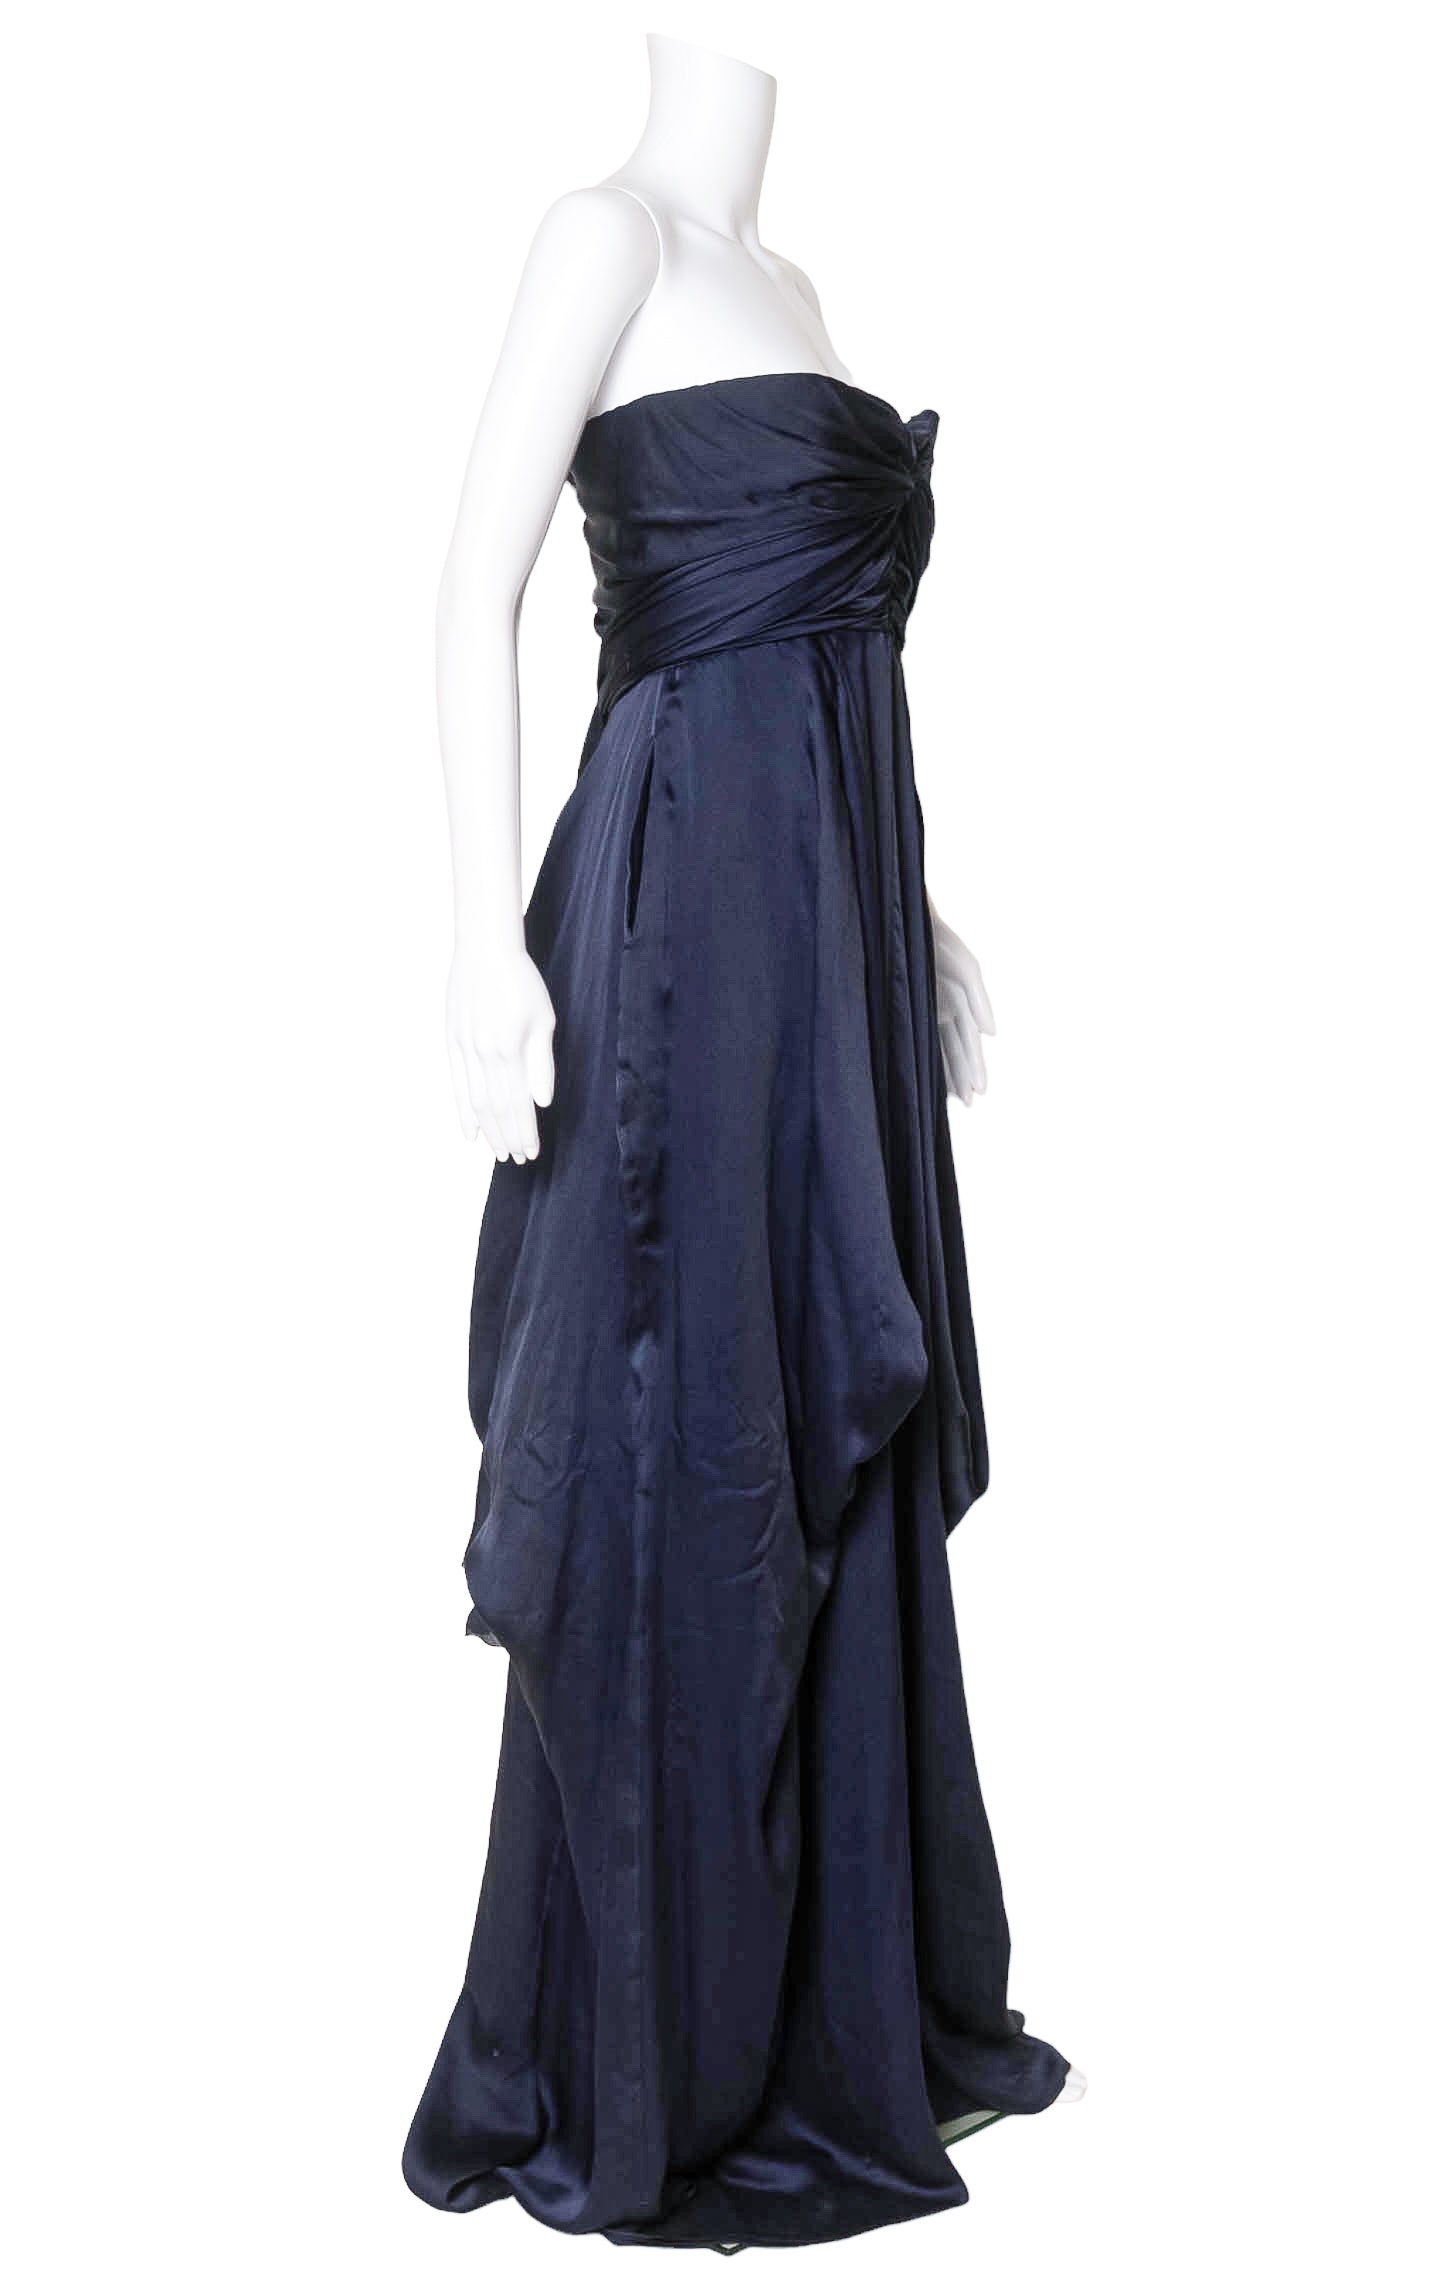 VINTAGE YVES SAINT LAURENT (RARE) Dress Size: No size tags, fits like US 6